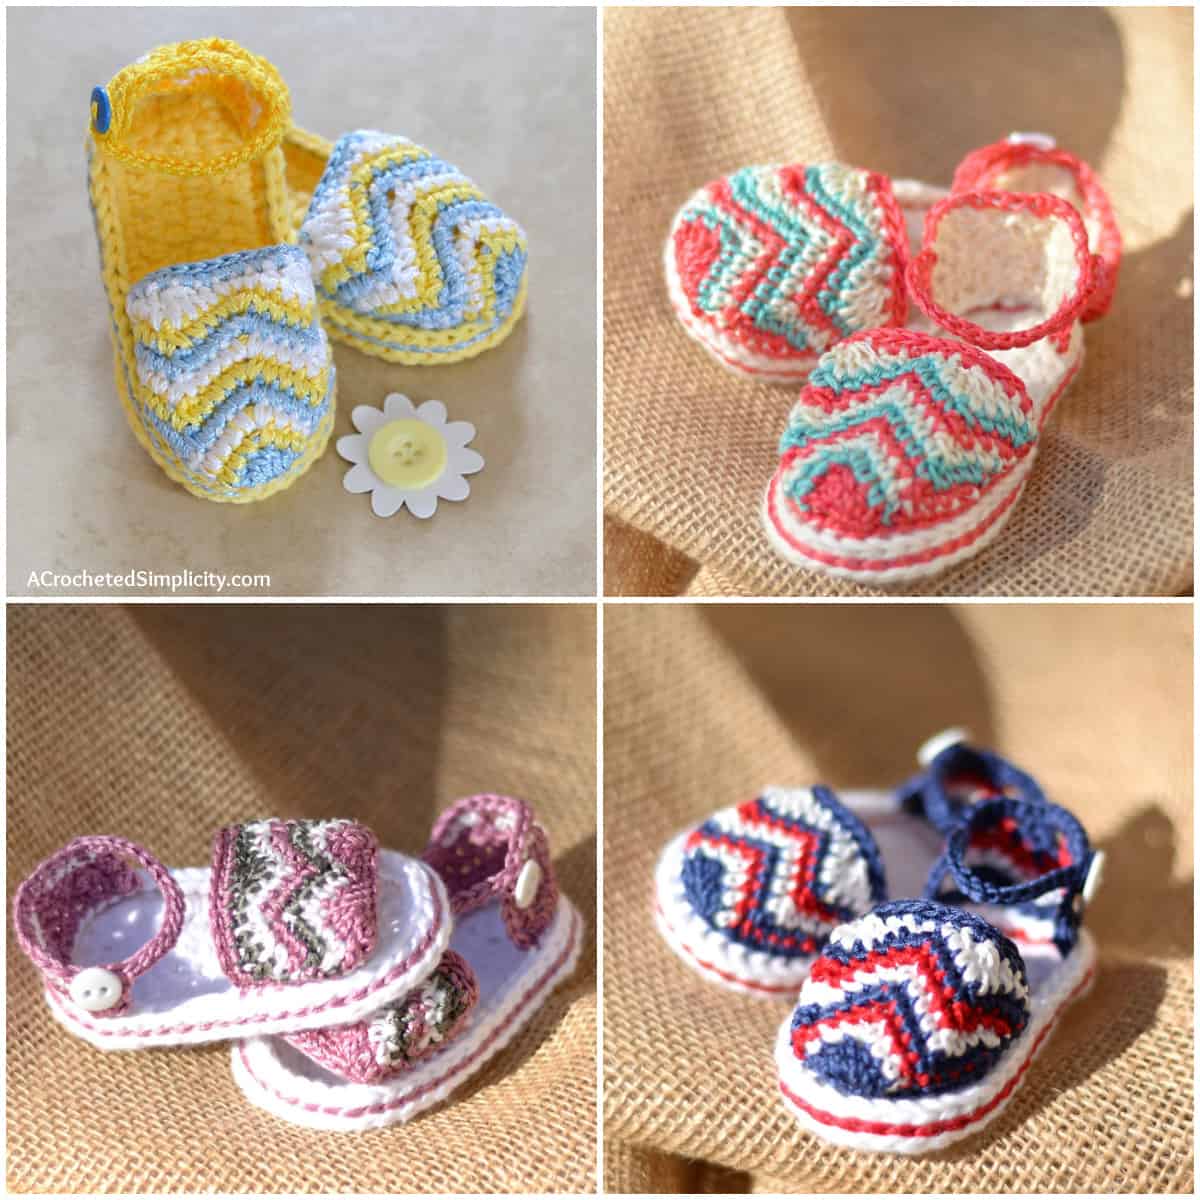 4 pair of chevron crochet baby sandals on burlap sack